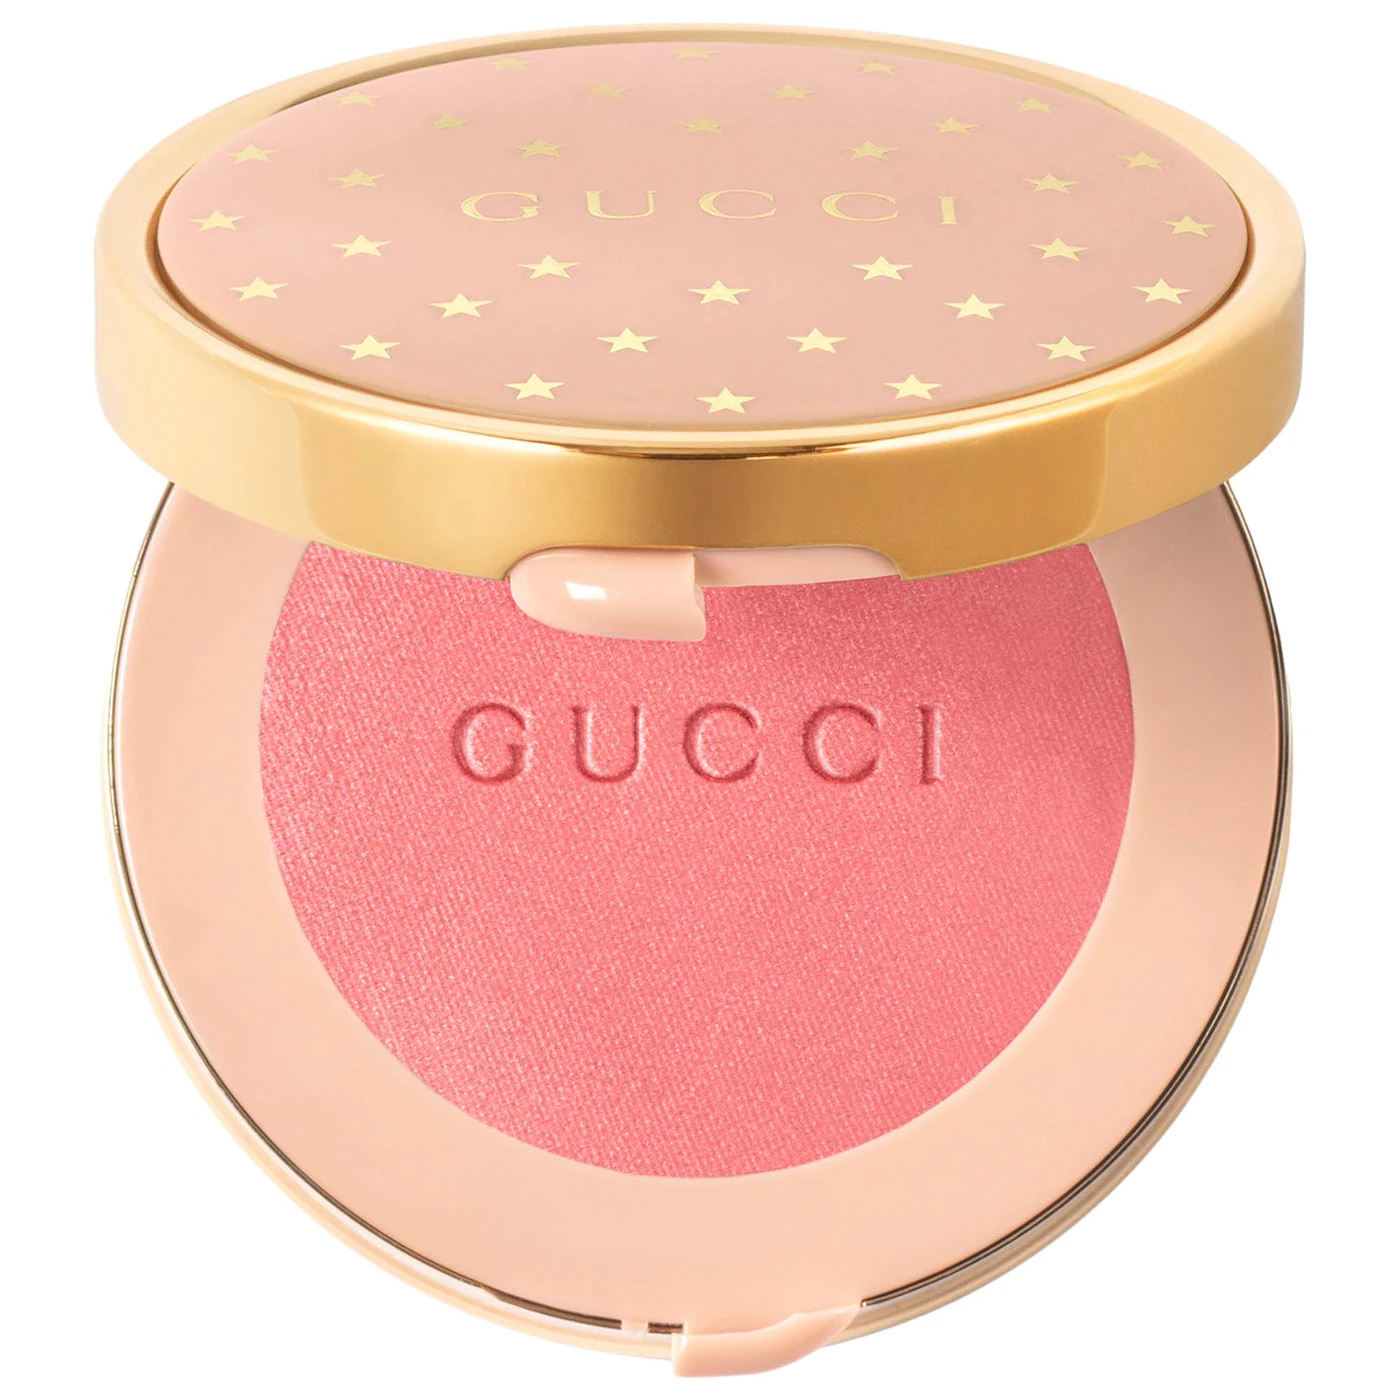 Gucci Beauty - Румяна Luminous Matte Beauty Blush - Фото 6